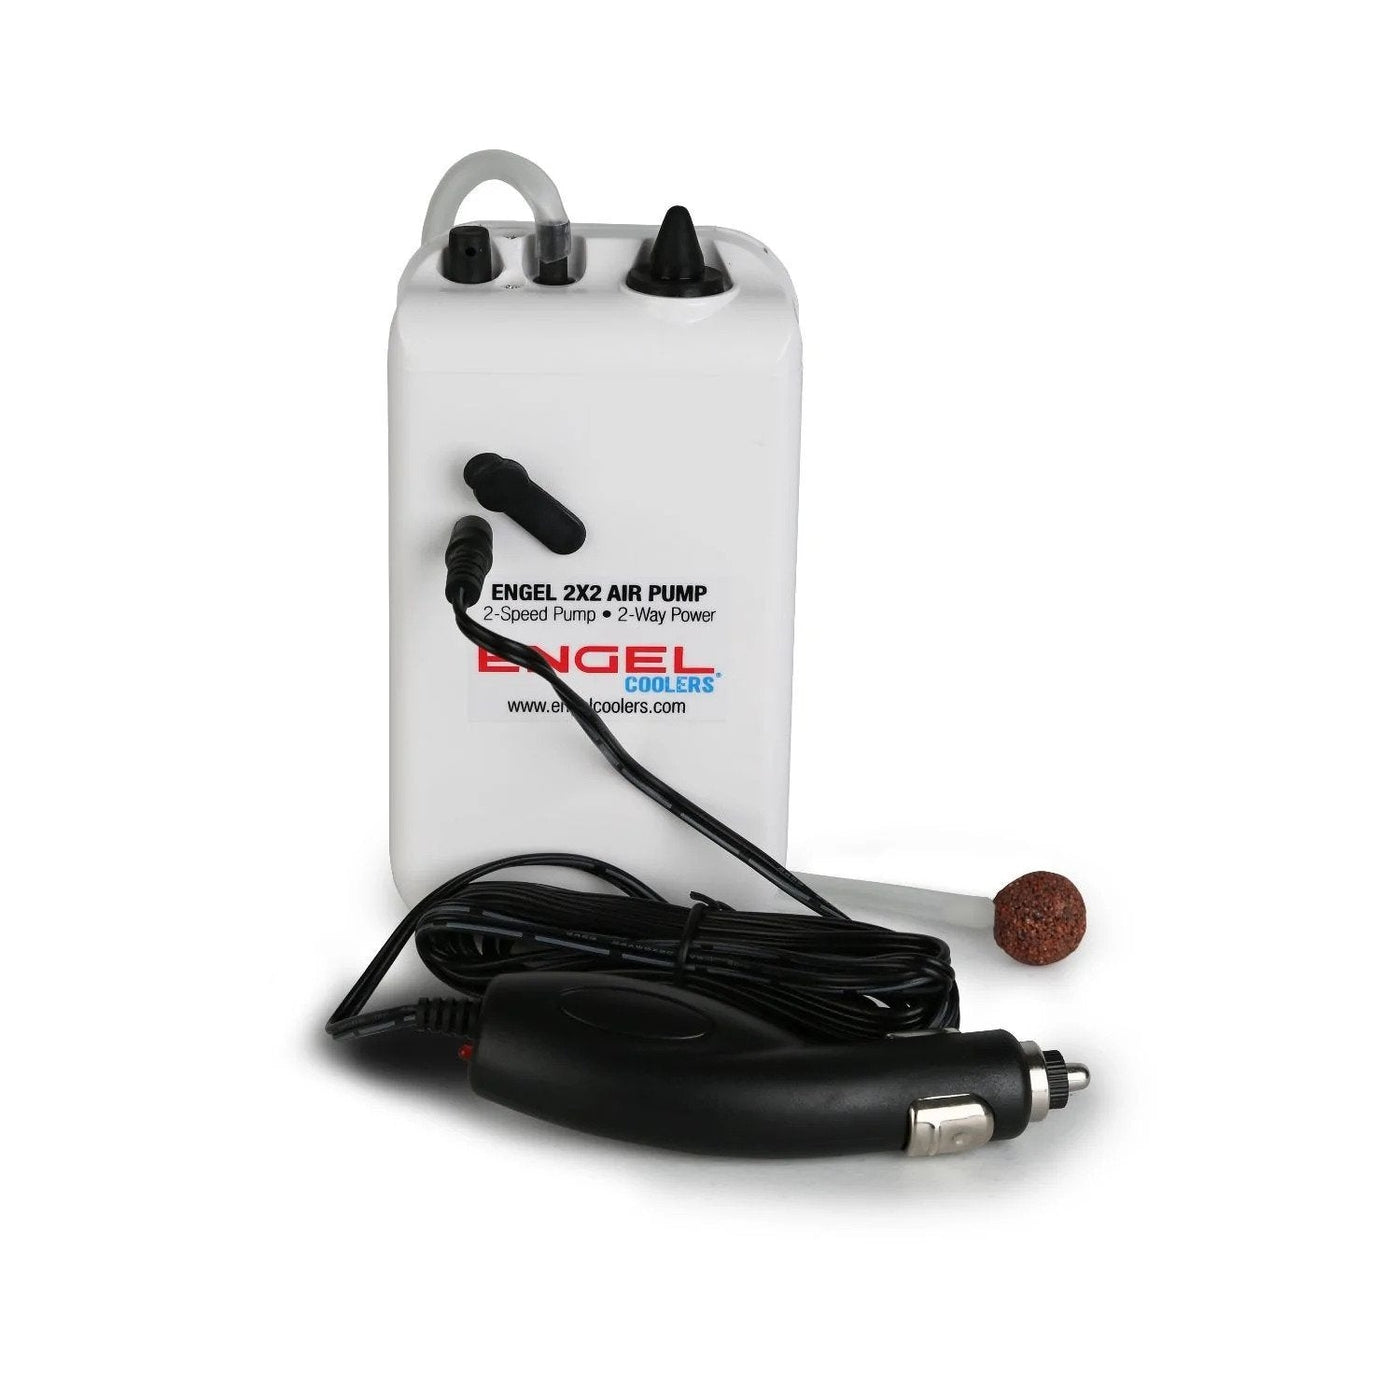 Engel® 2nd Generation 2X2 Portable Air Pump Accessories Engel Coolers 